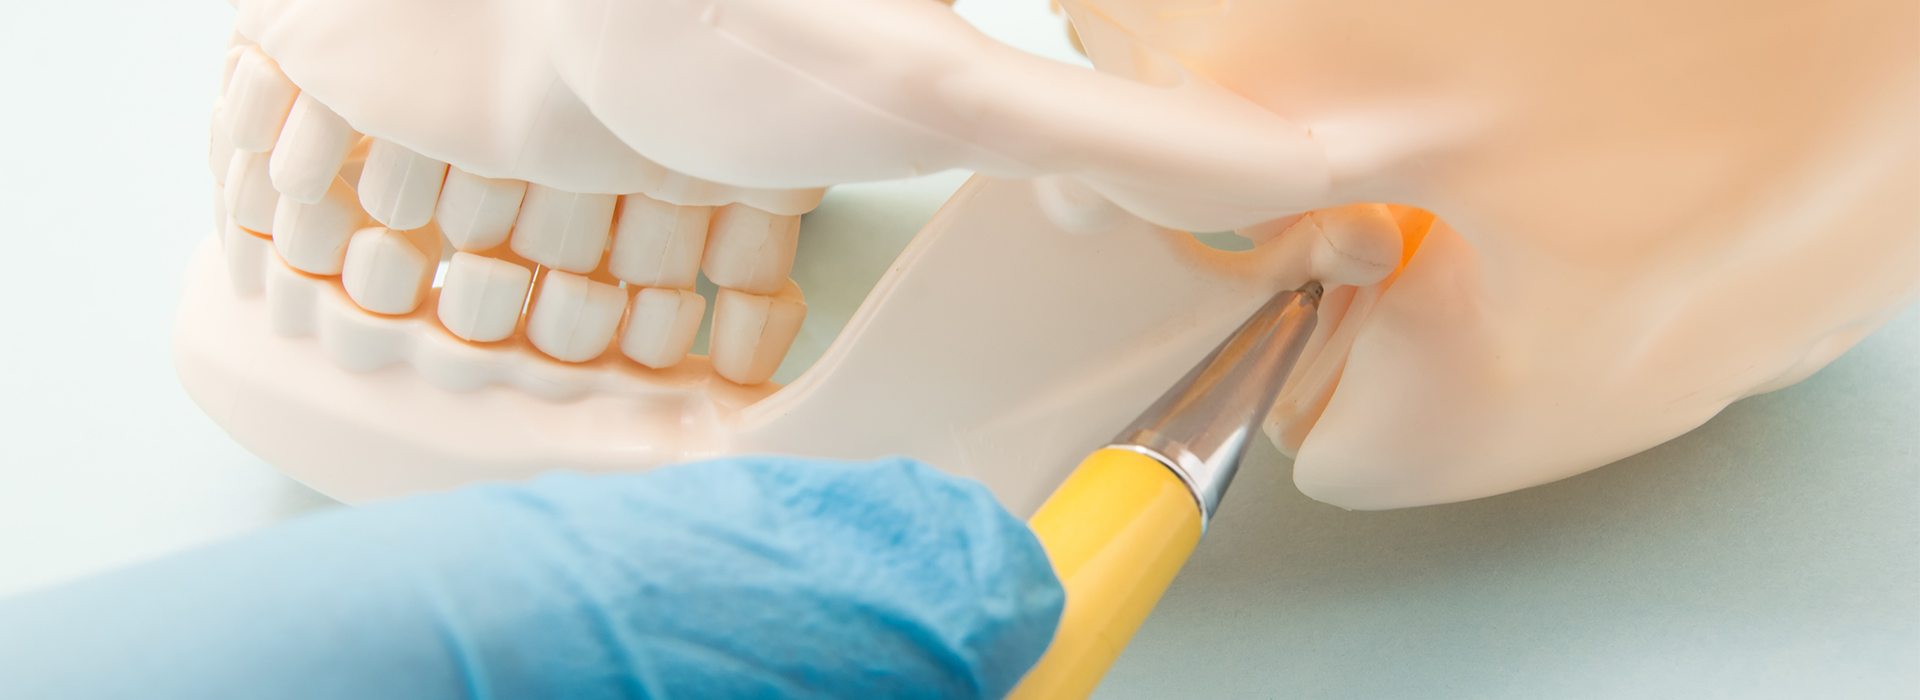 TruBlu Dentistry | Dental Fillings, Oral Cancer Screening and Dental Cleanings